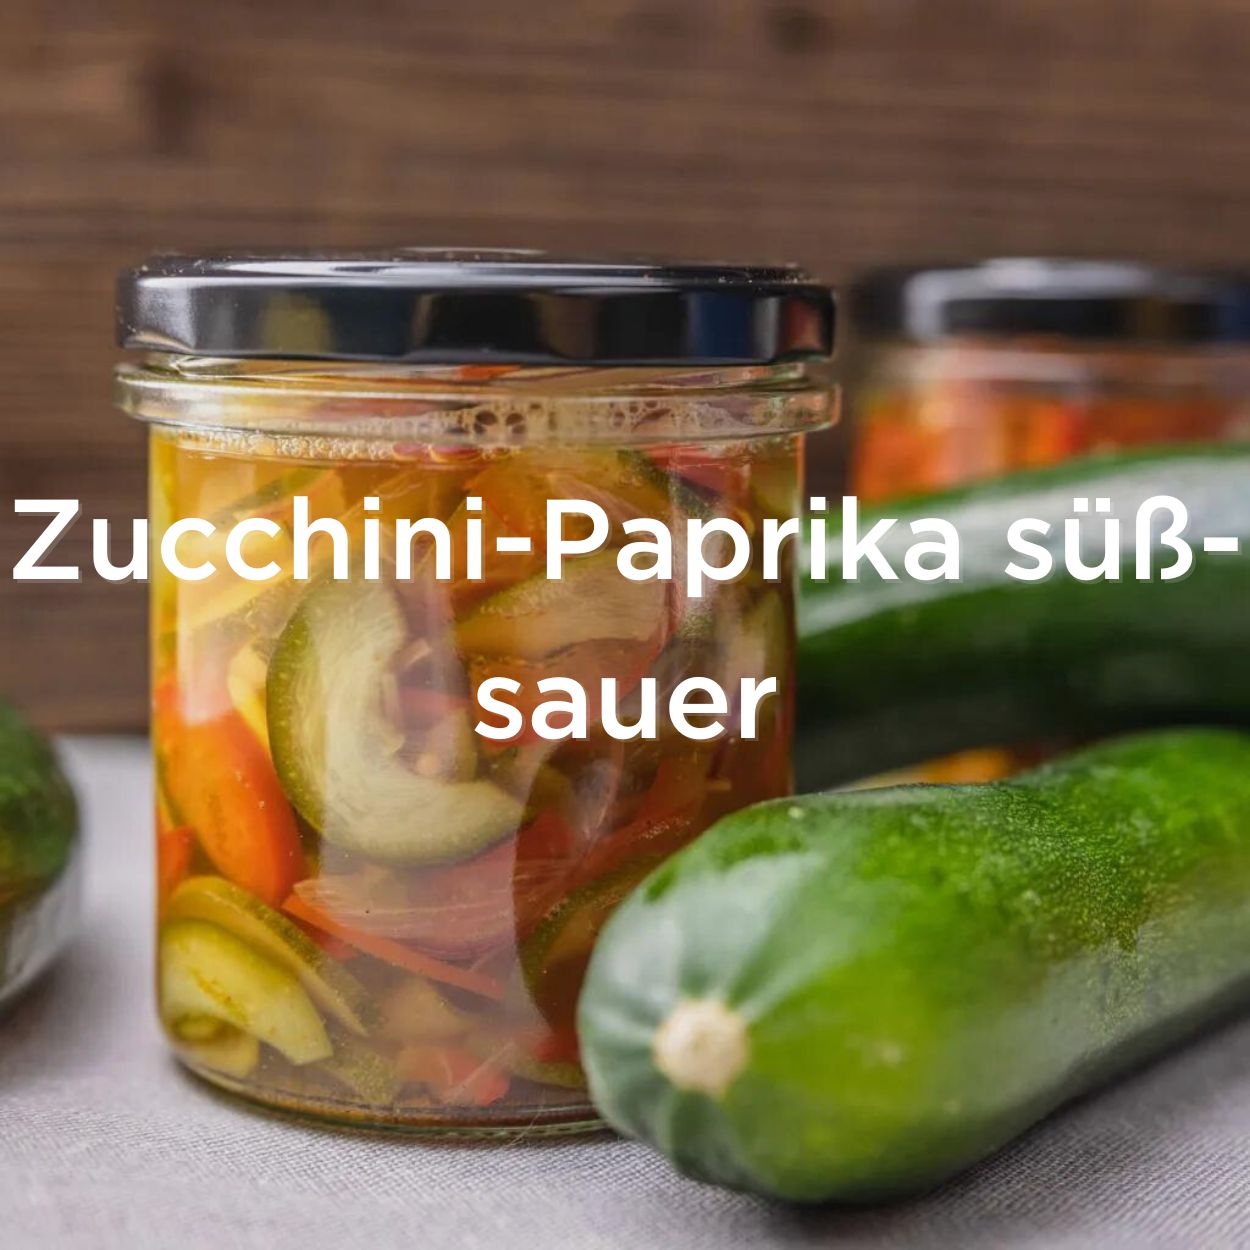 Zucchini-Paprika süß-sauer